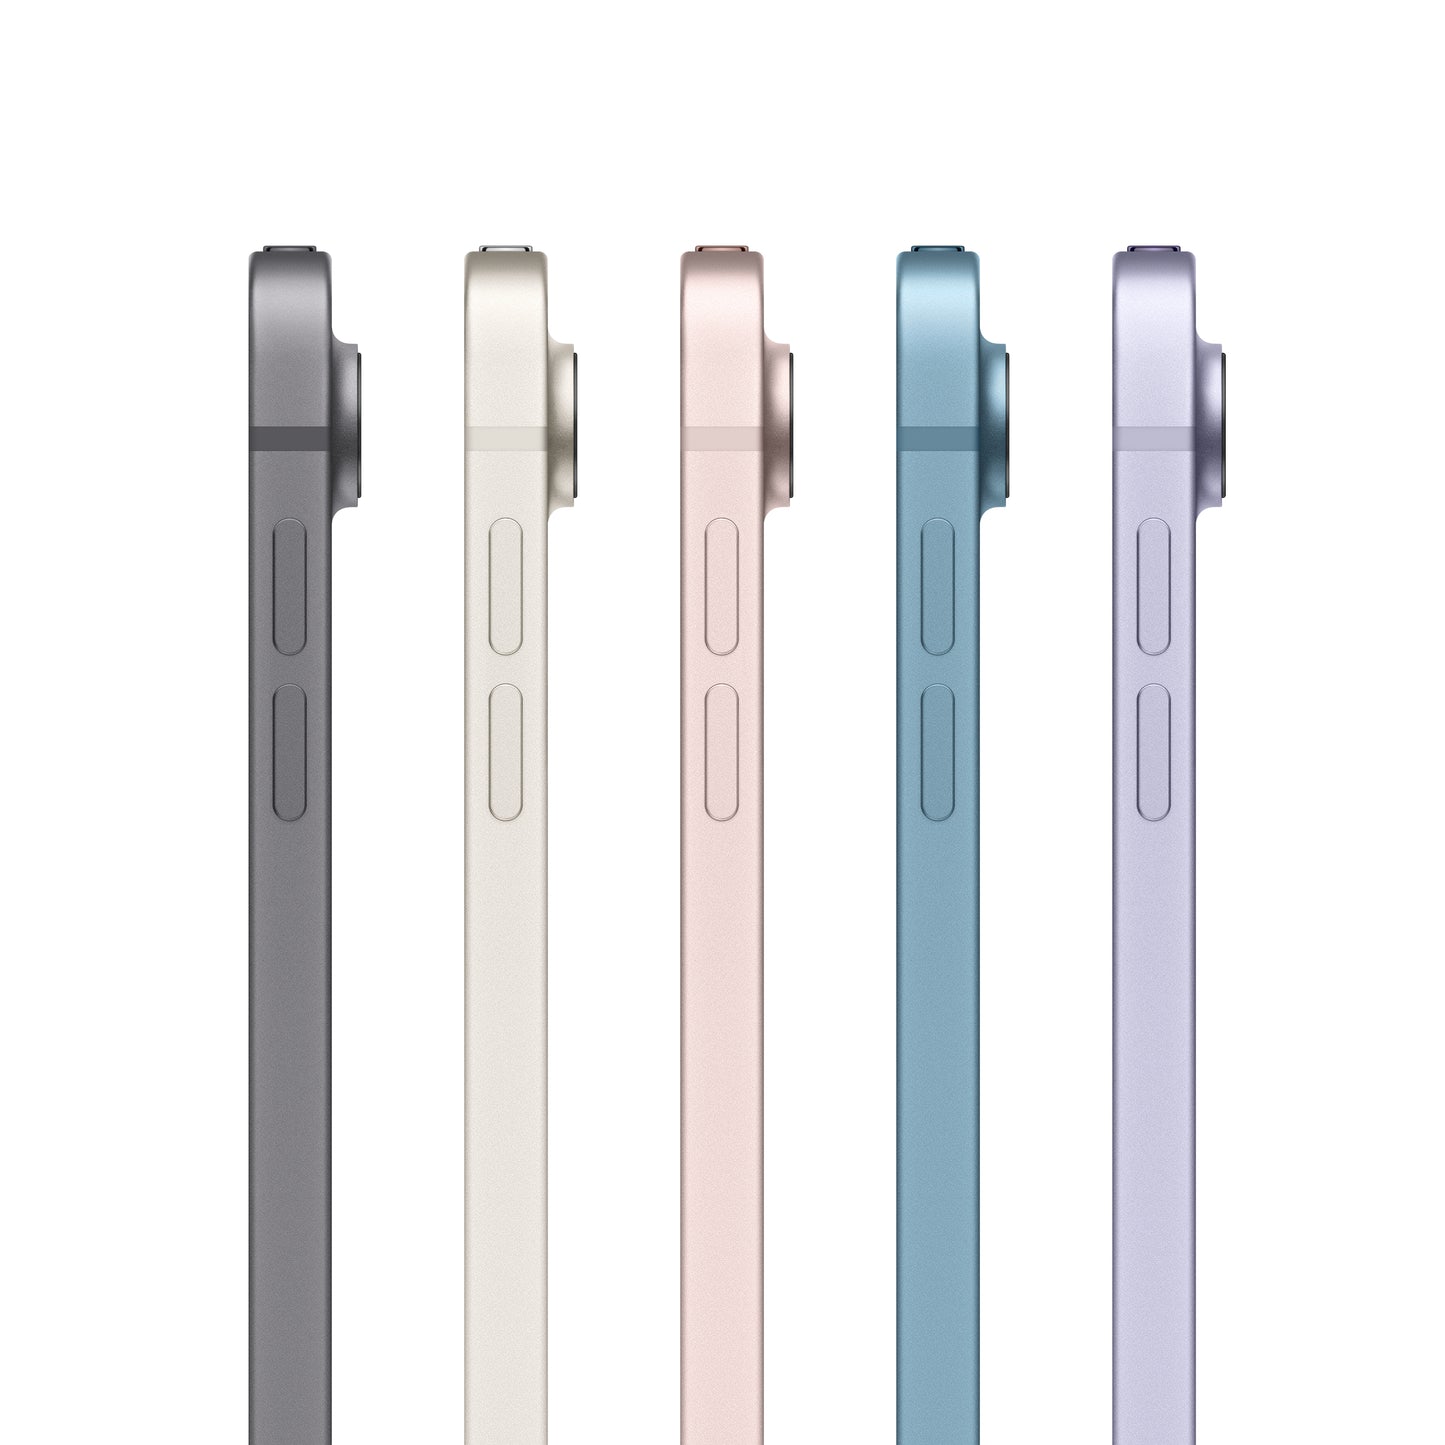 Apple iPad Air | M1 | Blue